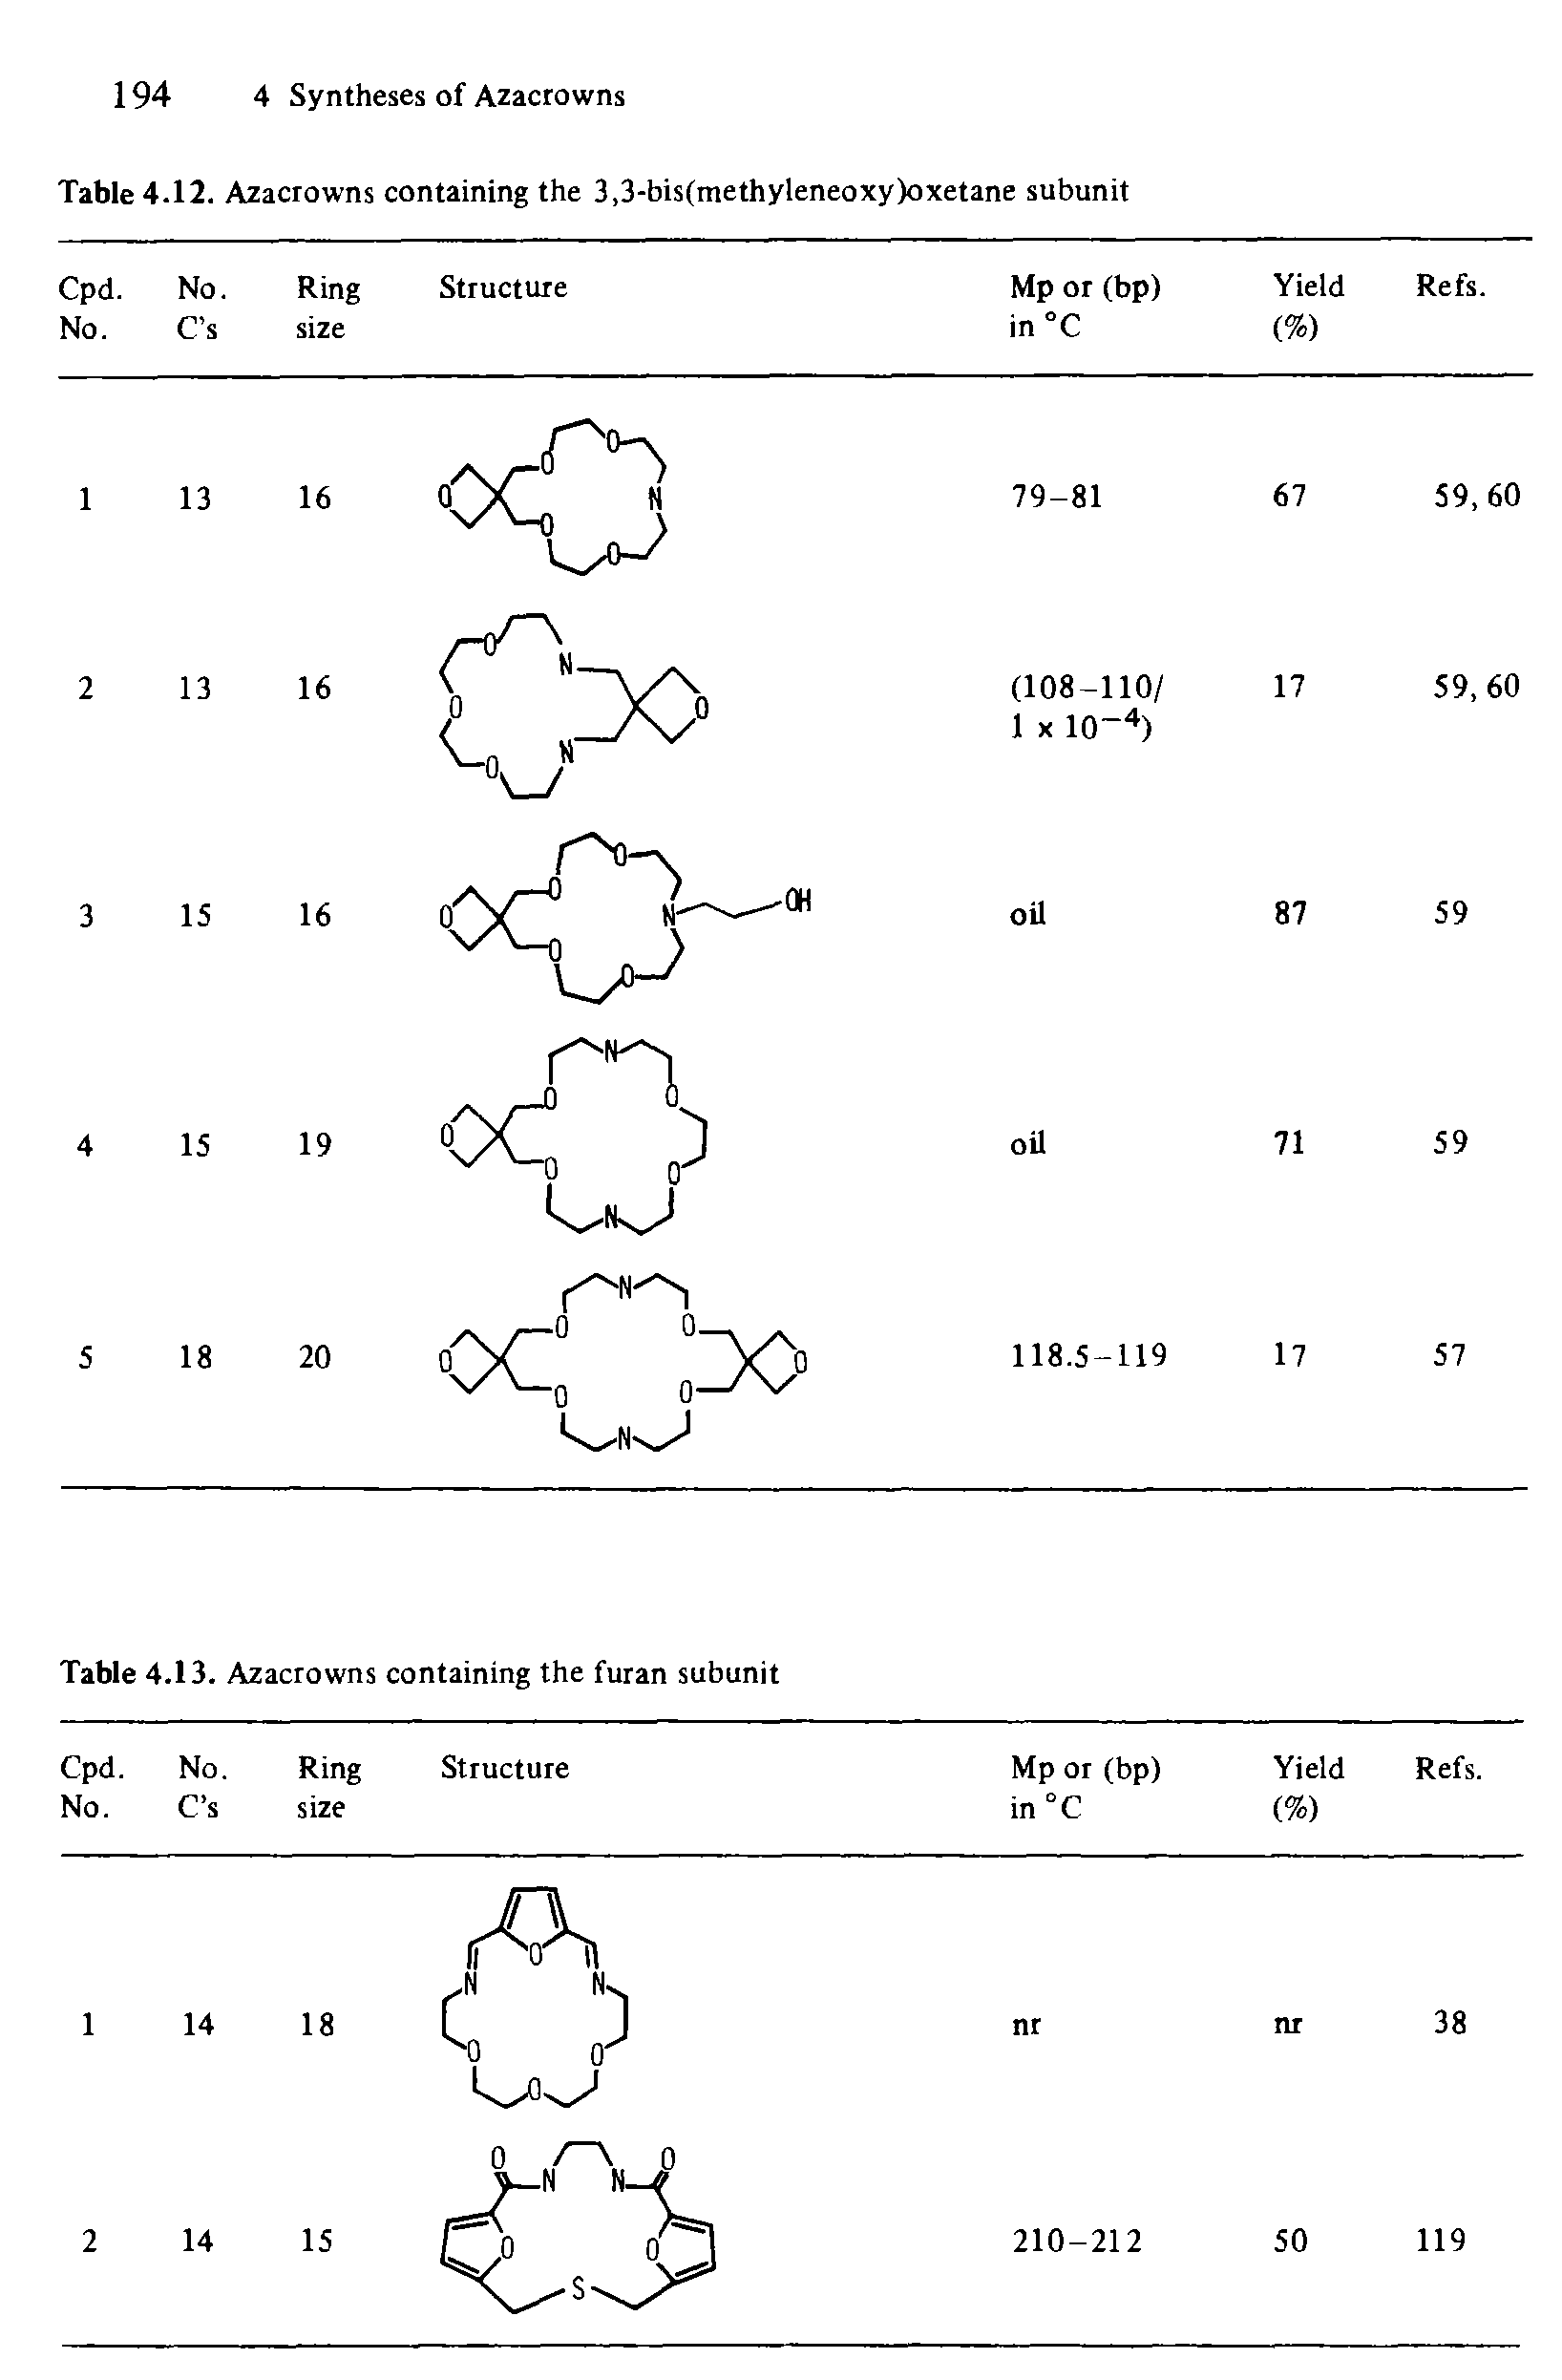 Table 4.12. Azacrowns containing the 3,3-bis(methyleneoxy)oxetane subunit...